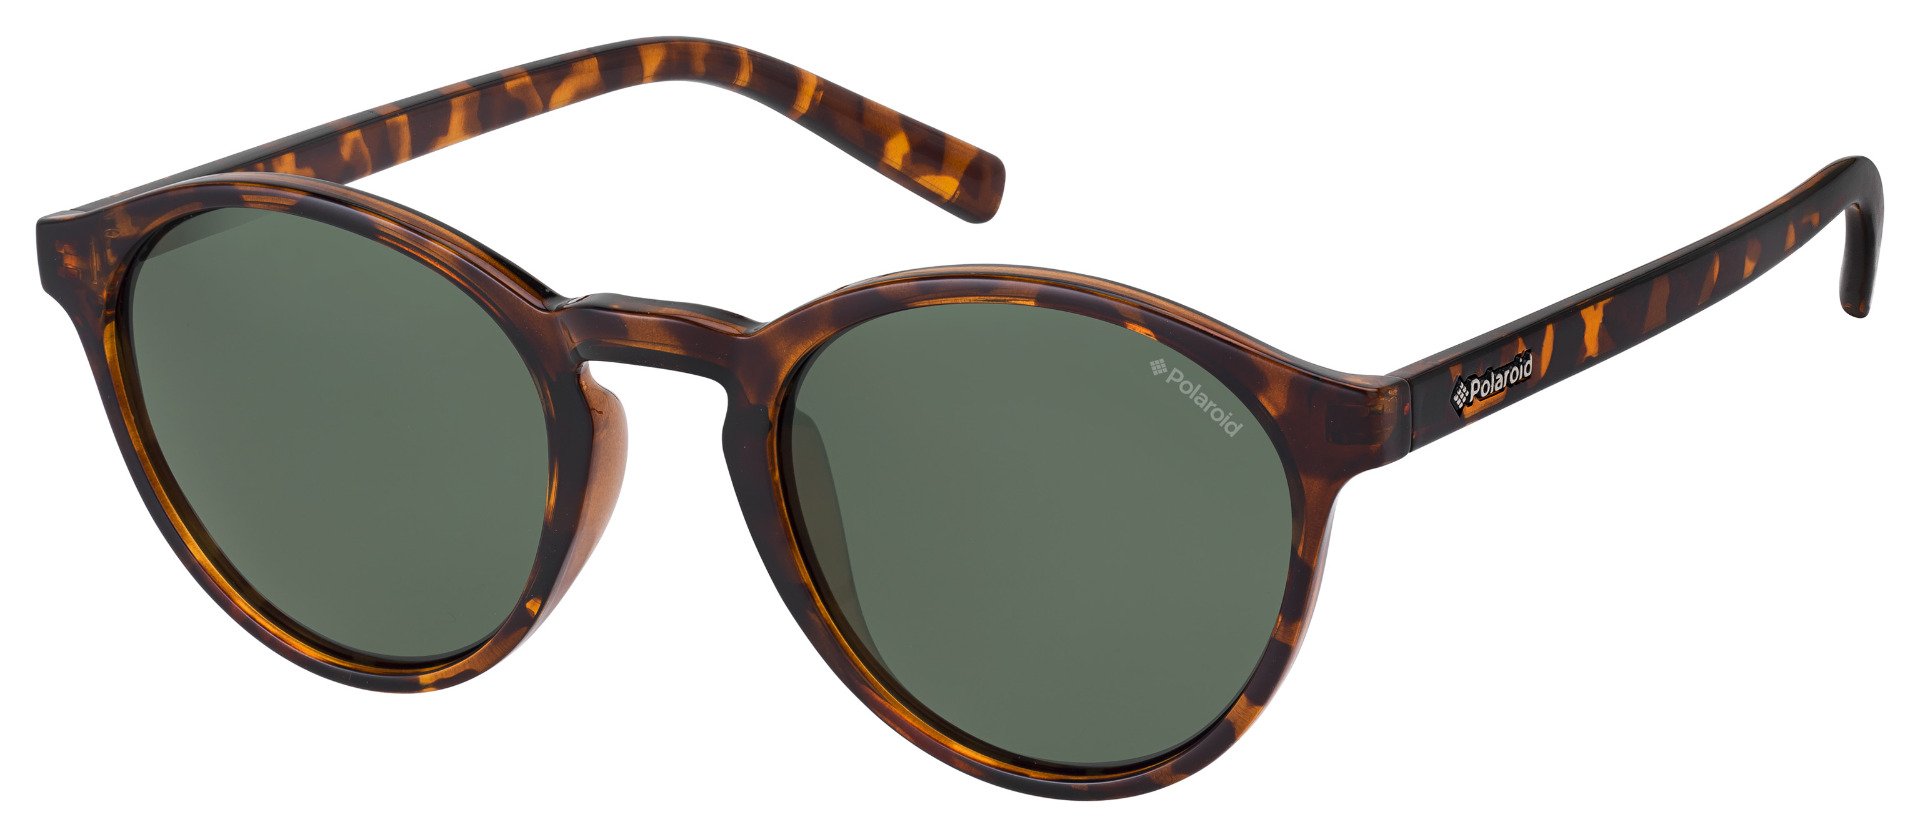 XOXO Avalon Brown with Tortoise Sunglasses | Costco